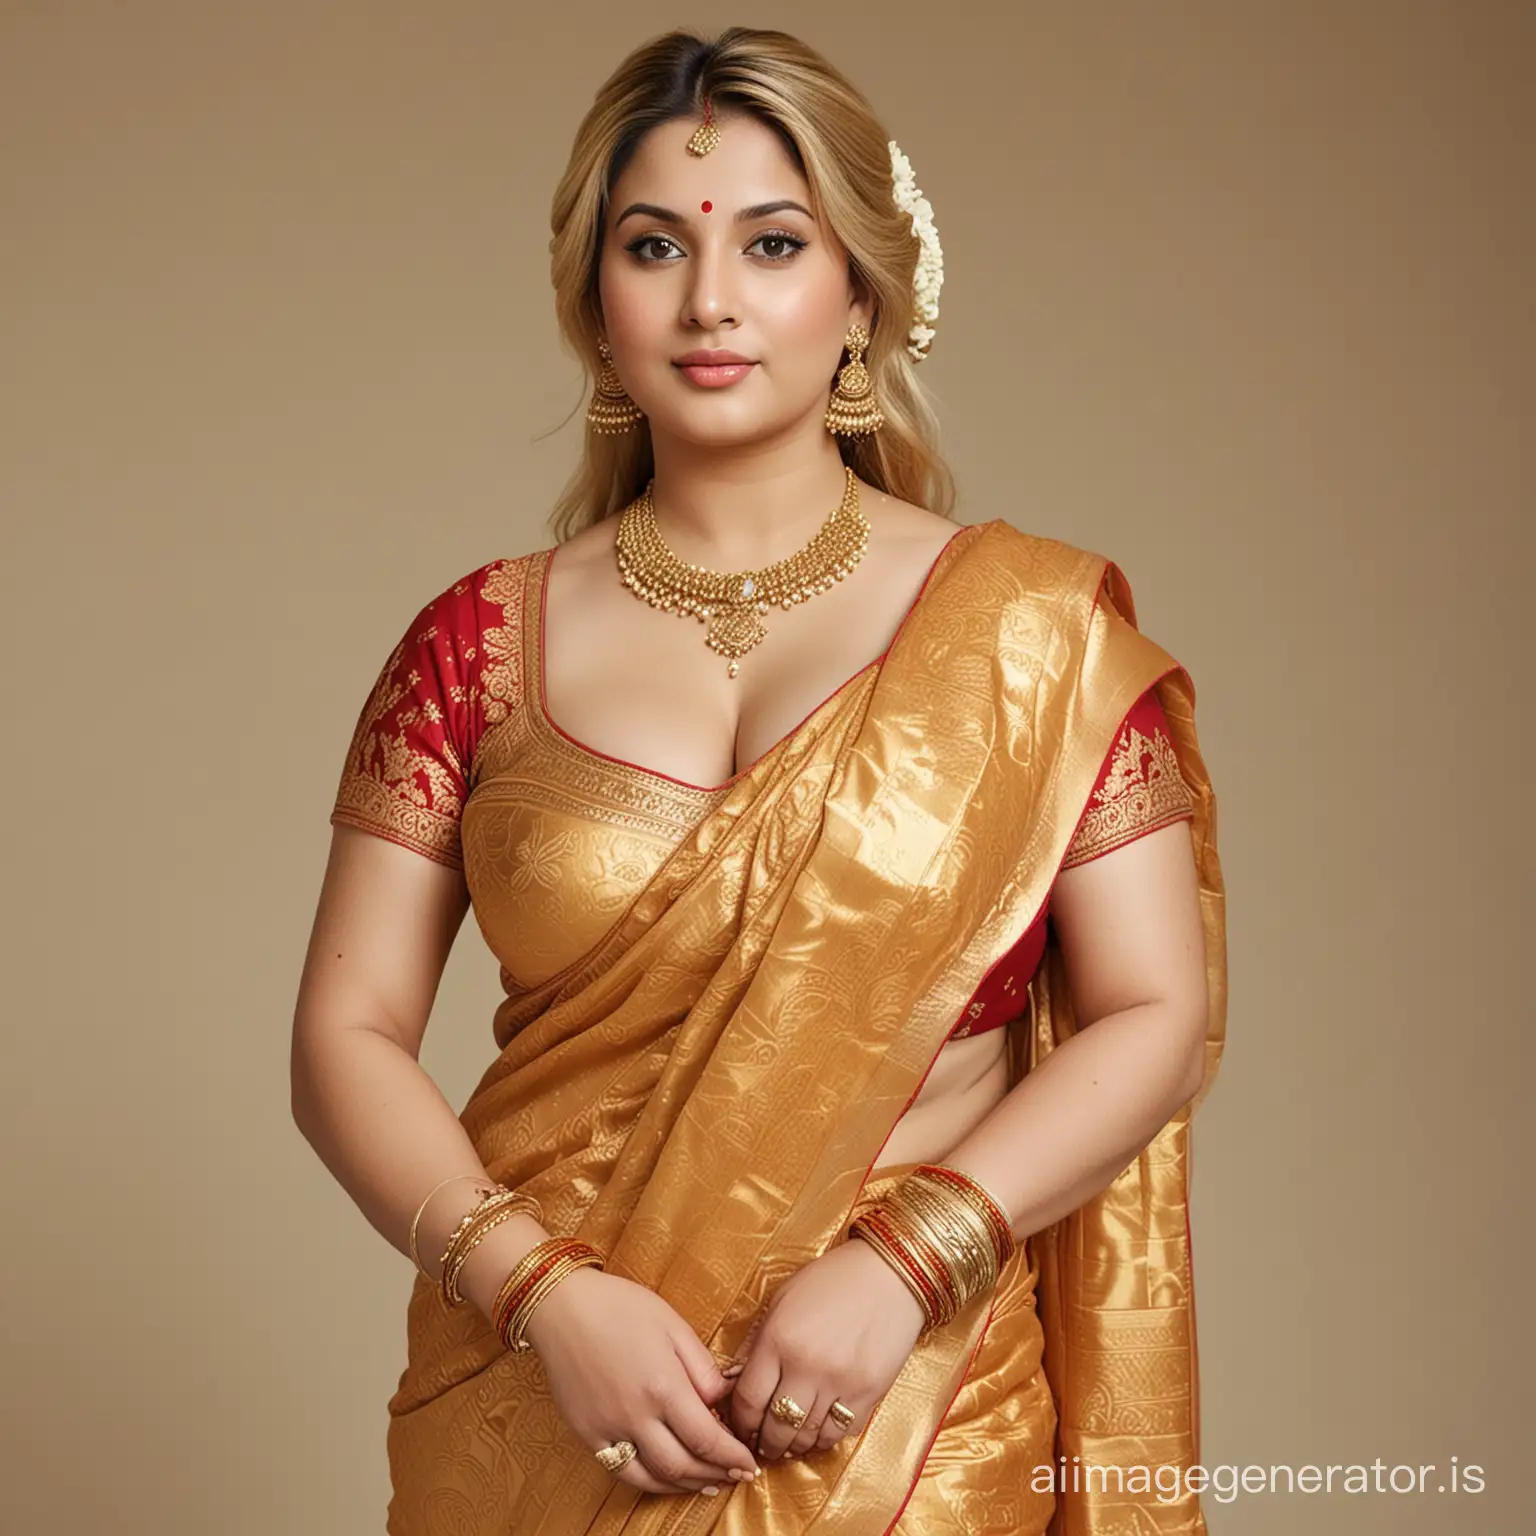 Curvy-American-Bride-in-Traditional-Banarasi-Saree-Gold-Jewelry-Adorned-Beauty